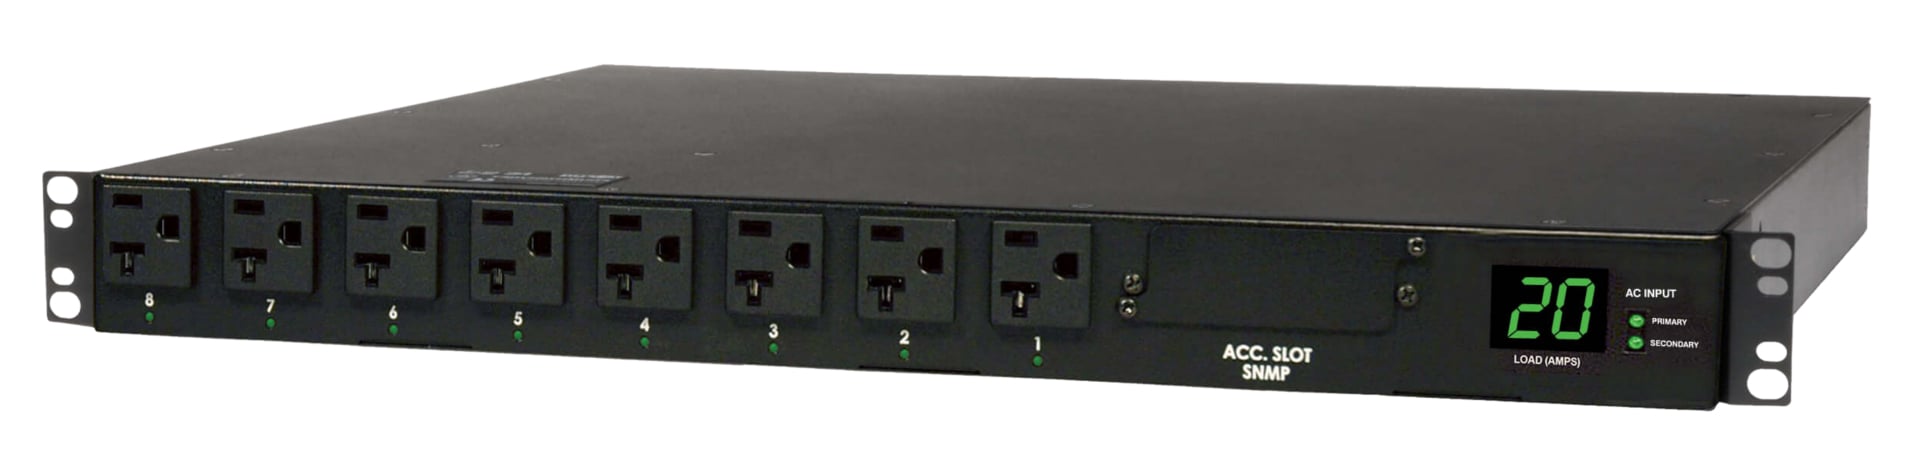 Tripp Lite PDU Metered ATS 120V 20A 5-15/20R 16 Outlet L5-20P Horizontal 1U - horizontal rackmount - power distribution